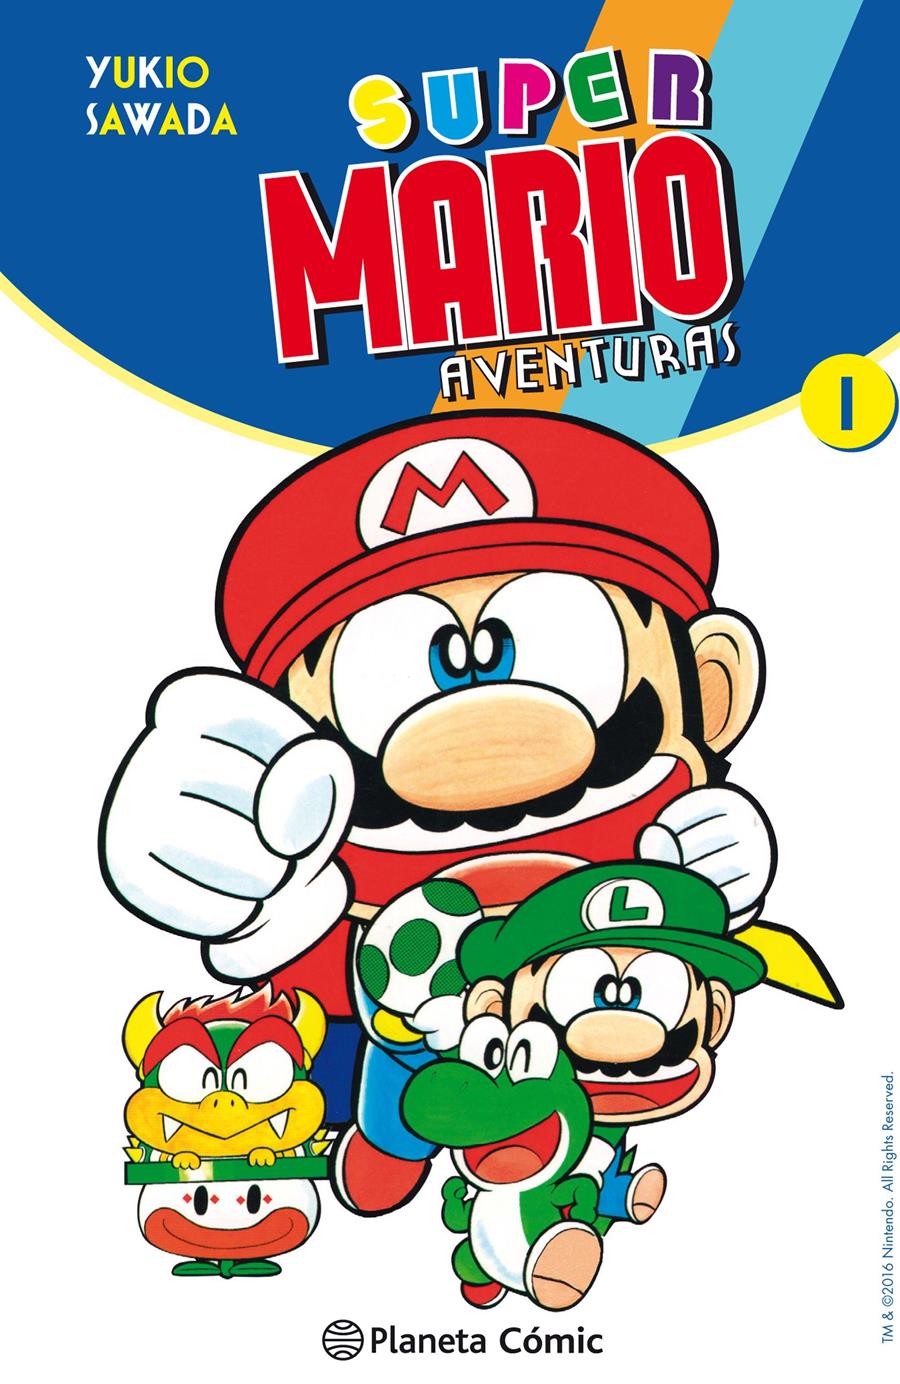 Super Mario nº 01 | N1216-PLAN18 | Yukio Sawada | Terra de Còmic - Tu tienda de cómics online especializada en cómics, manga y merchandising